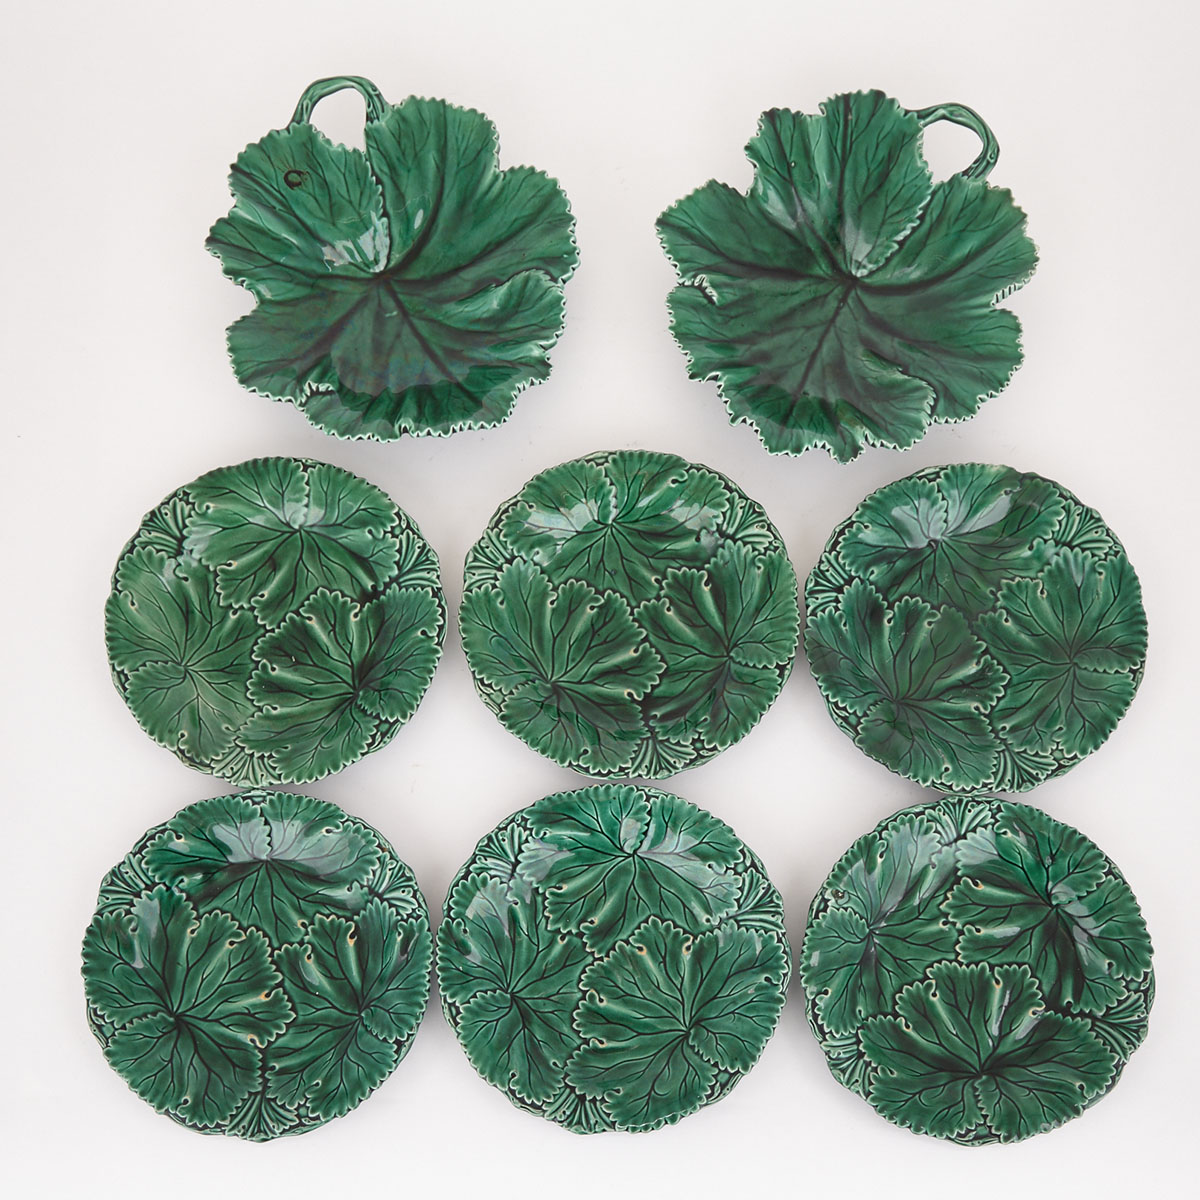 Copeland Green Glazed Moulded Cabbage Leaf Dessert Service, late 19th century